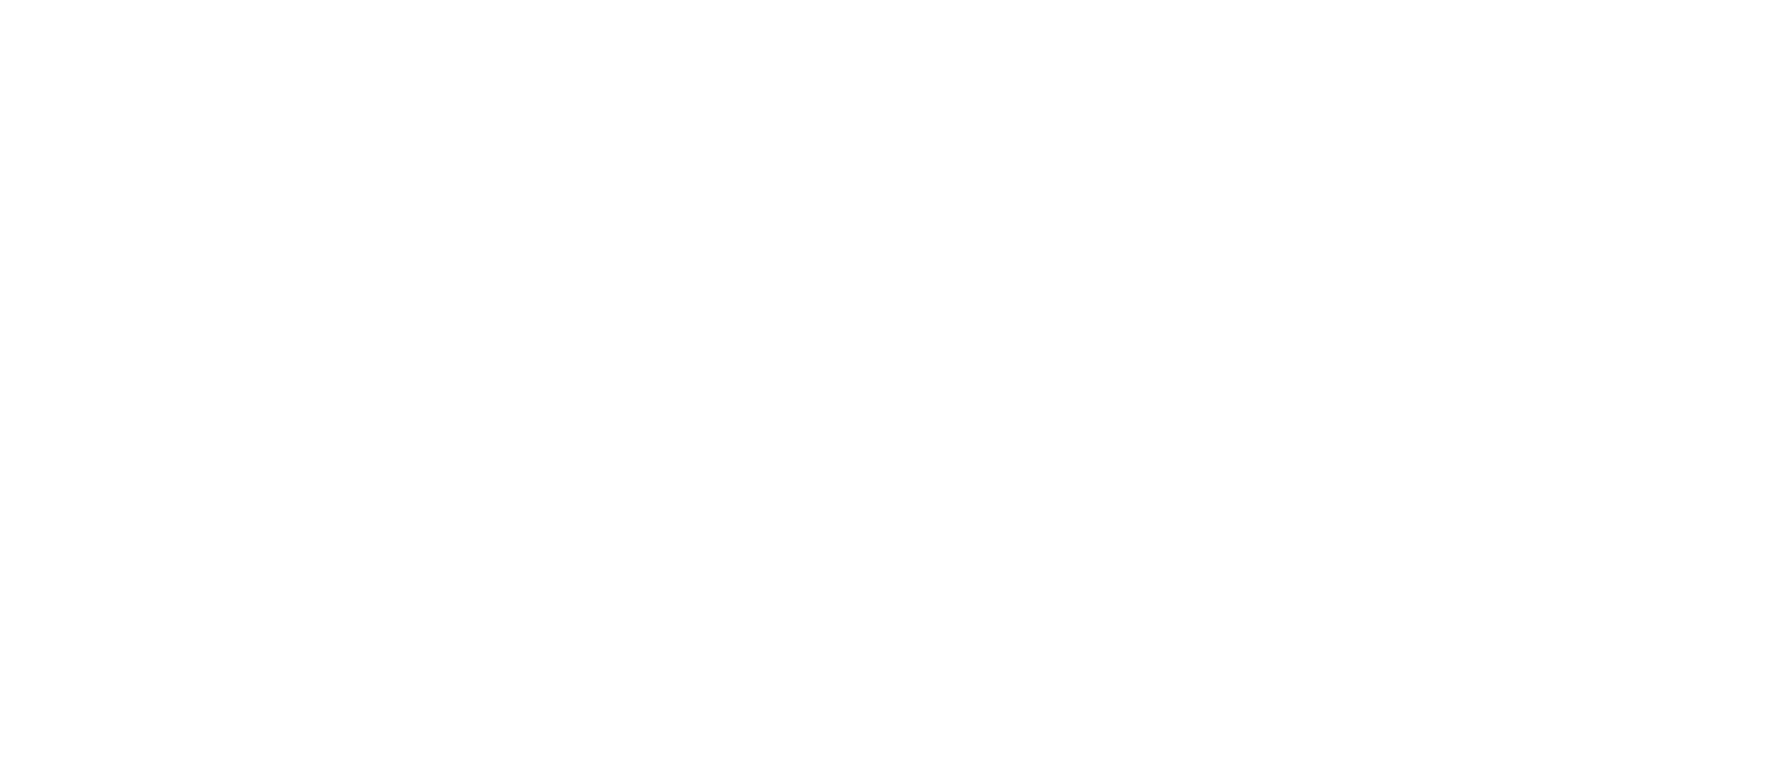 Joe Montana: Cool Under Pressure logo